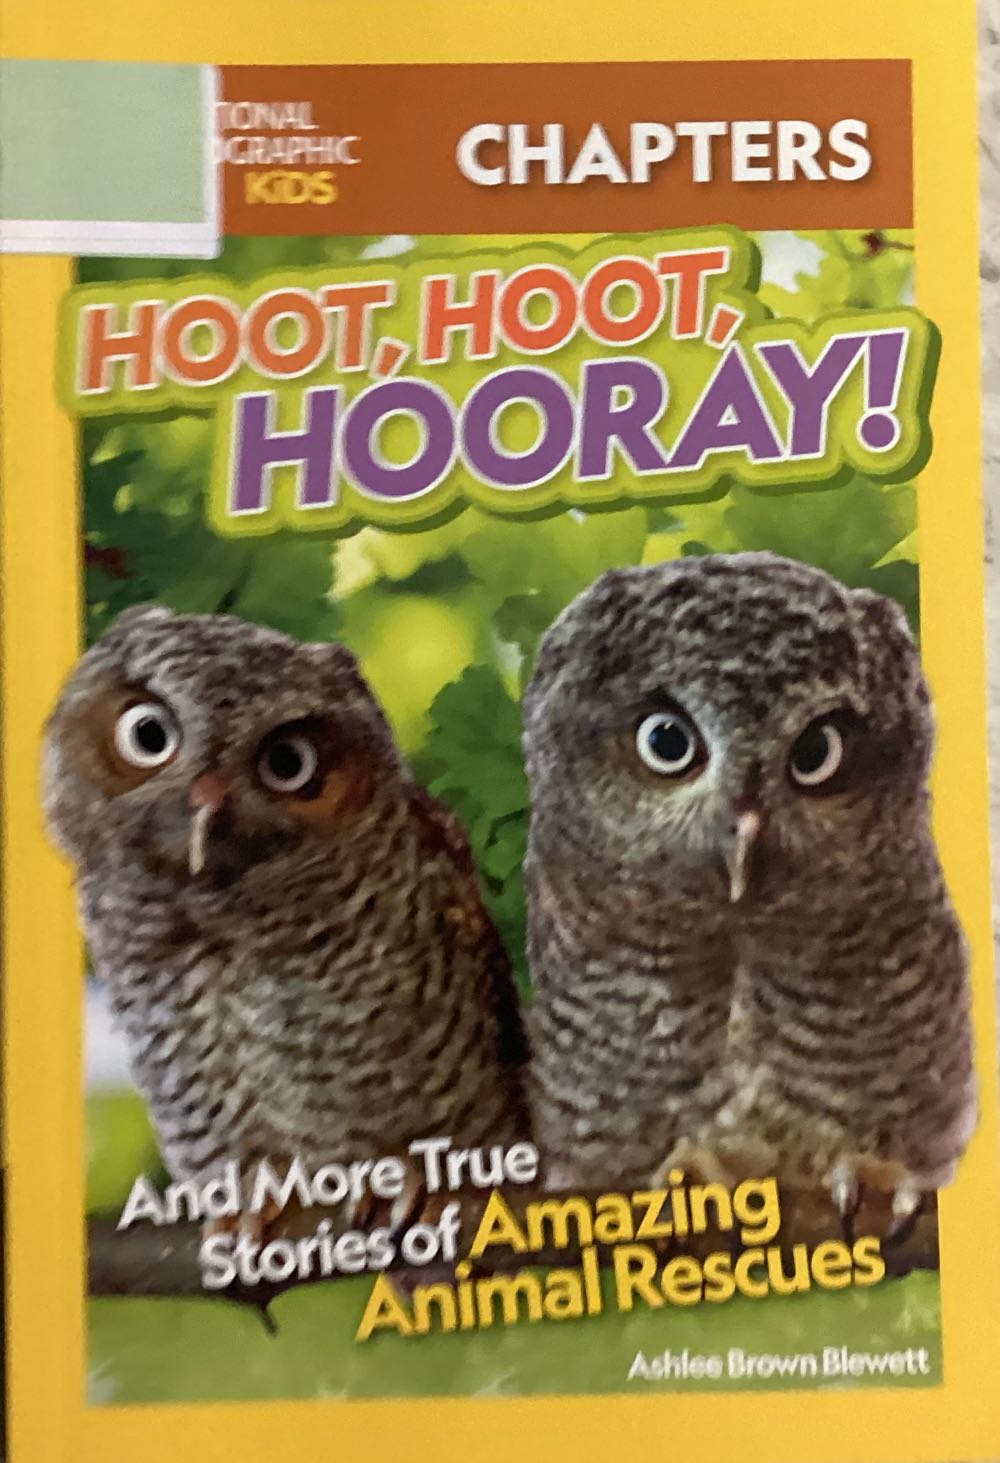 Hoot, Hoot, Hooray! - Ashlee Brown Blewett book collectible [Barcode 9781426374852] - Main Image 1